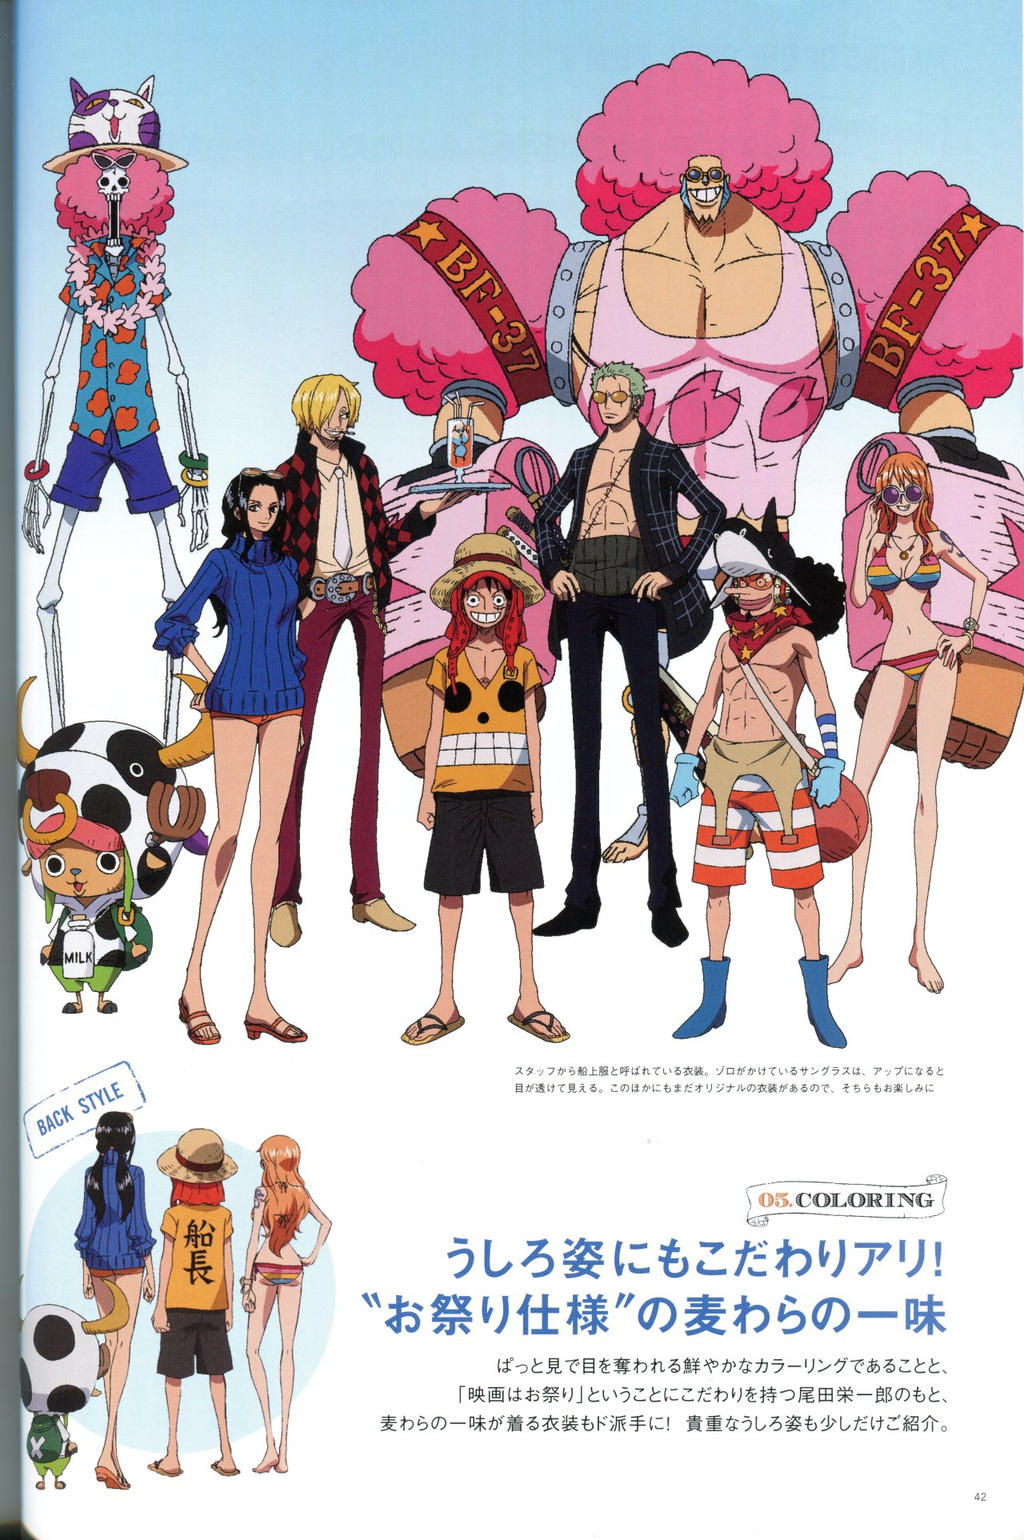 Z - One Piece Film Z by elpipe3000 on DeviantArt